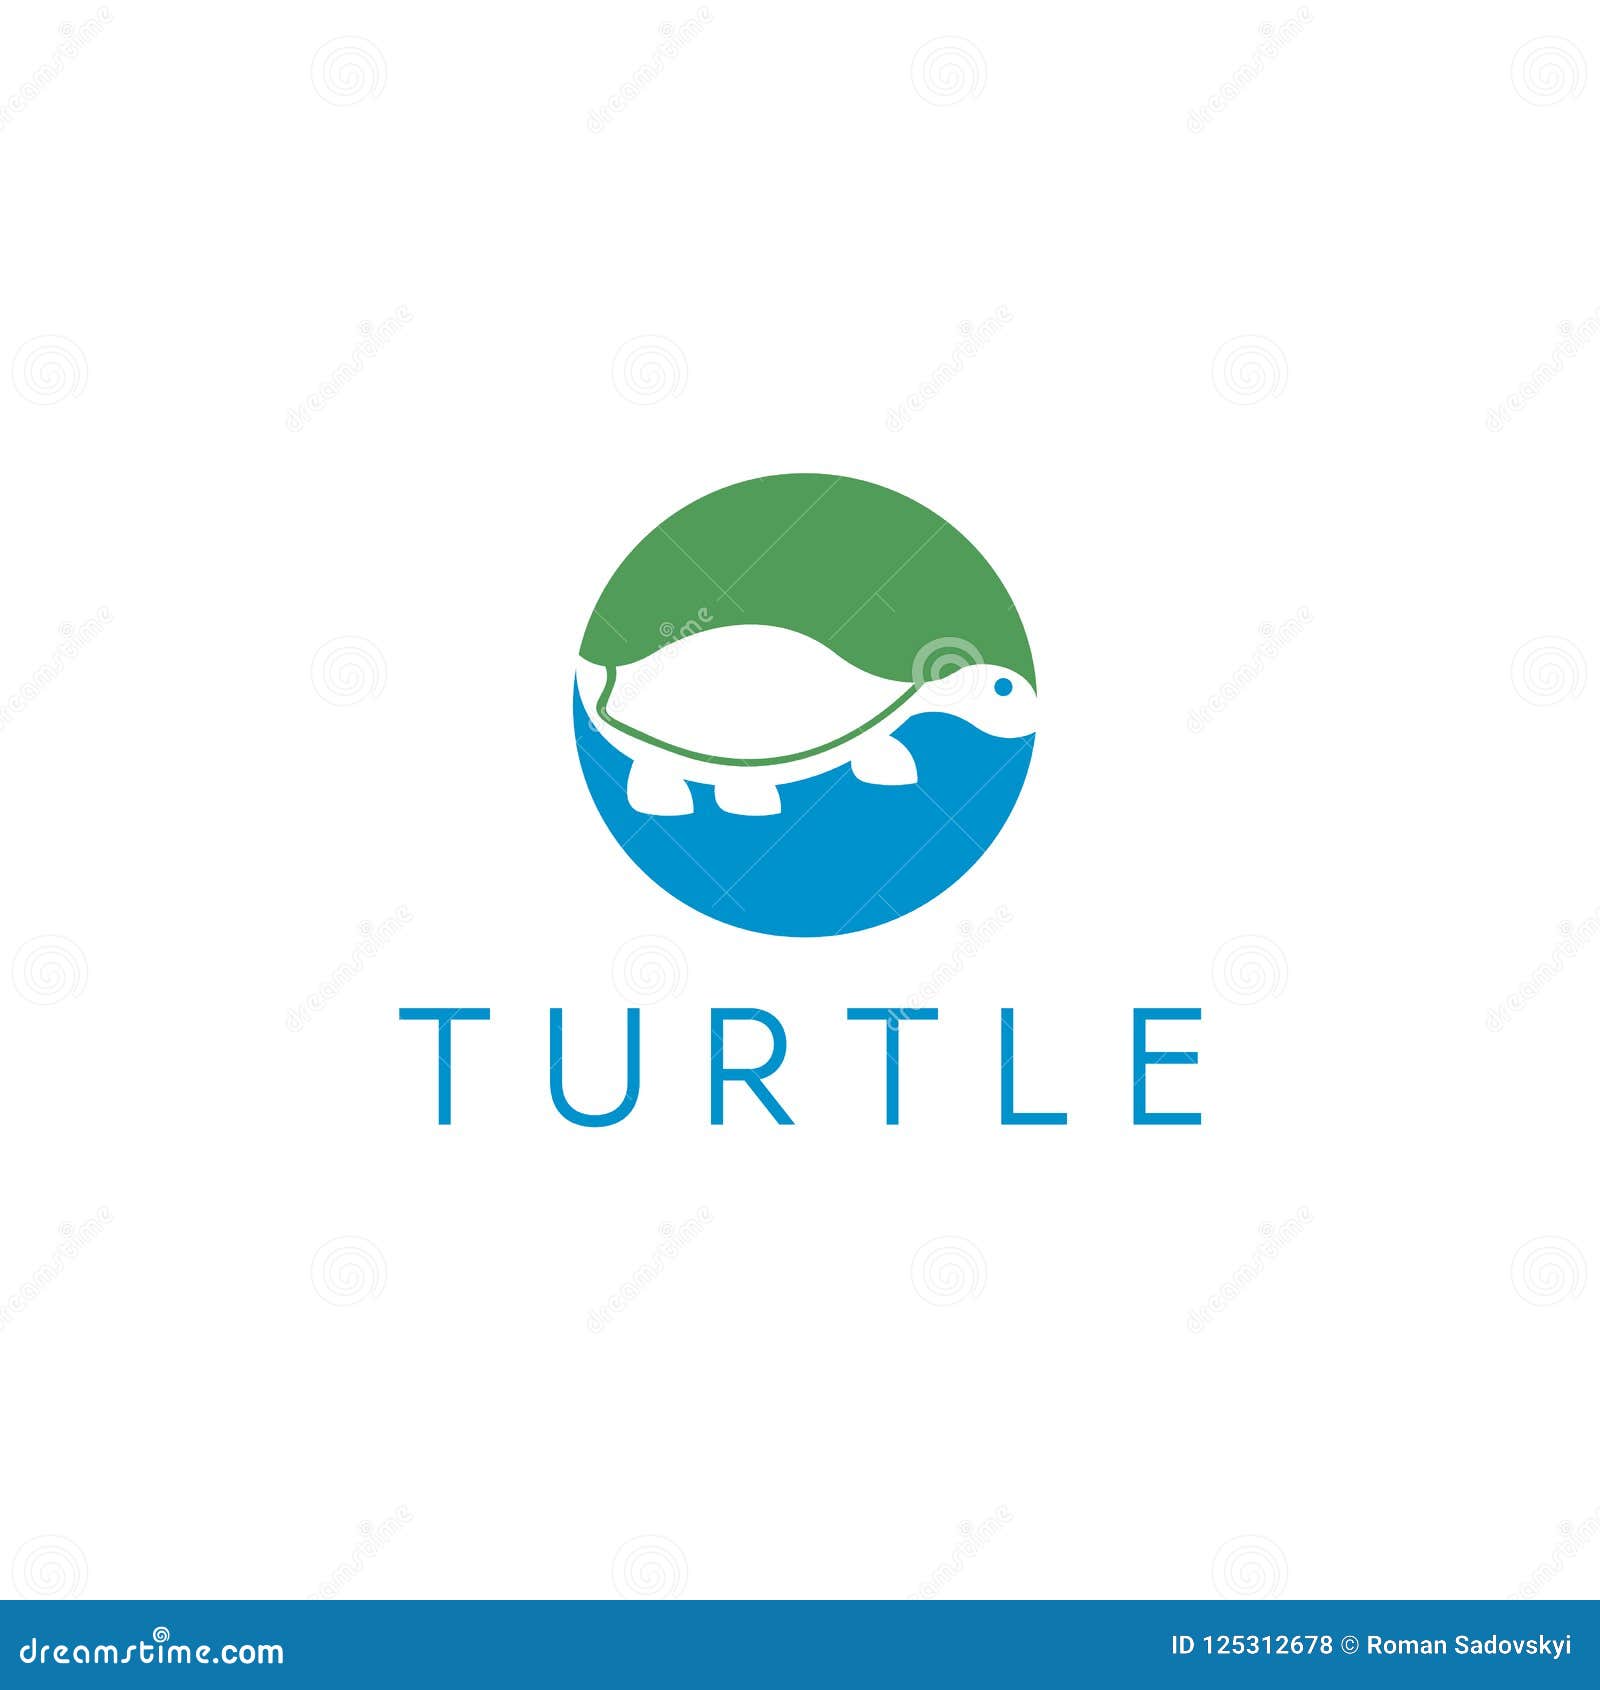 Pc Logo Turtle For Windows 10